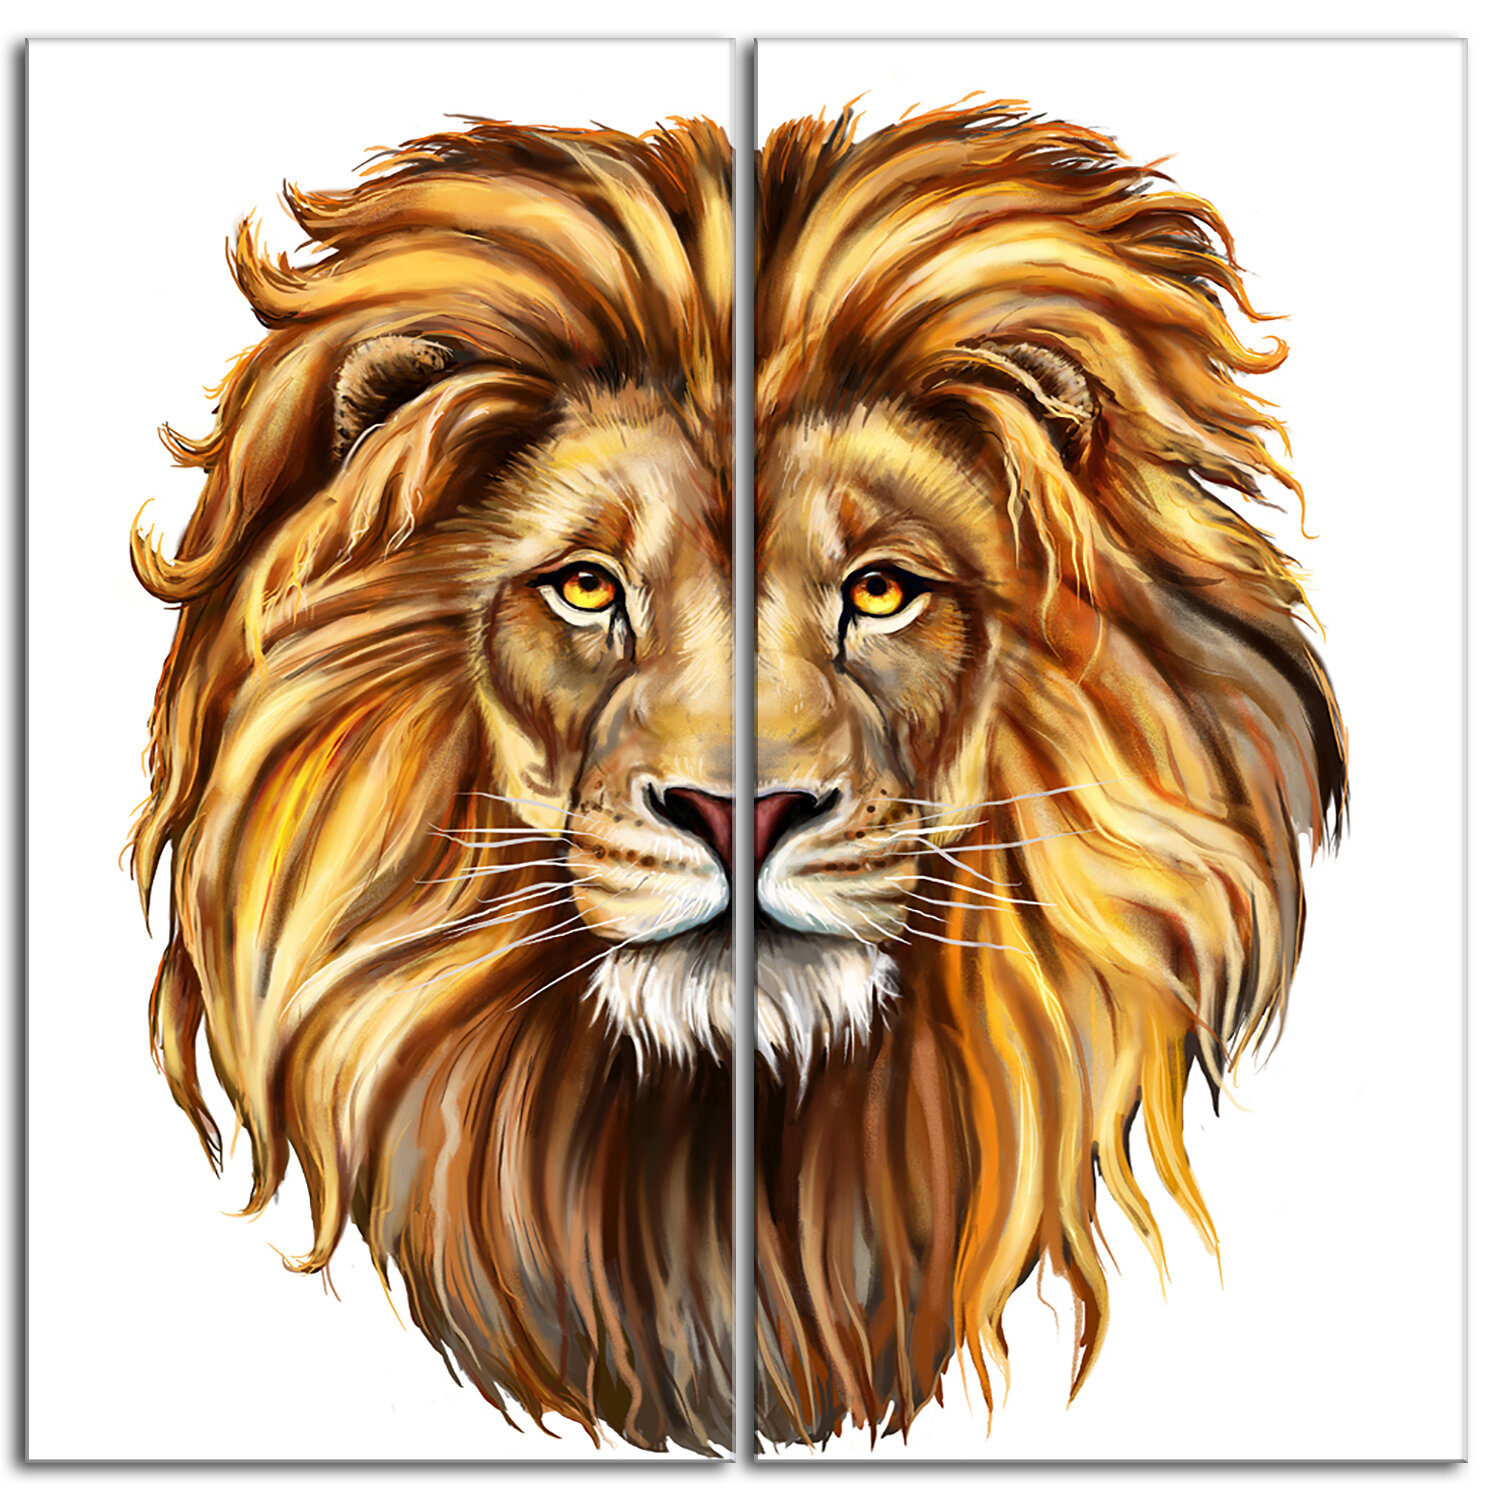 Featured image of post Lion Art - Lion wallpapers, backgrounds, images— best lion desktop wallpaper sort wallpapers by: